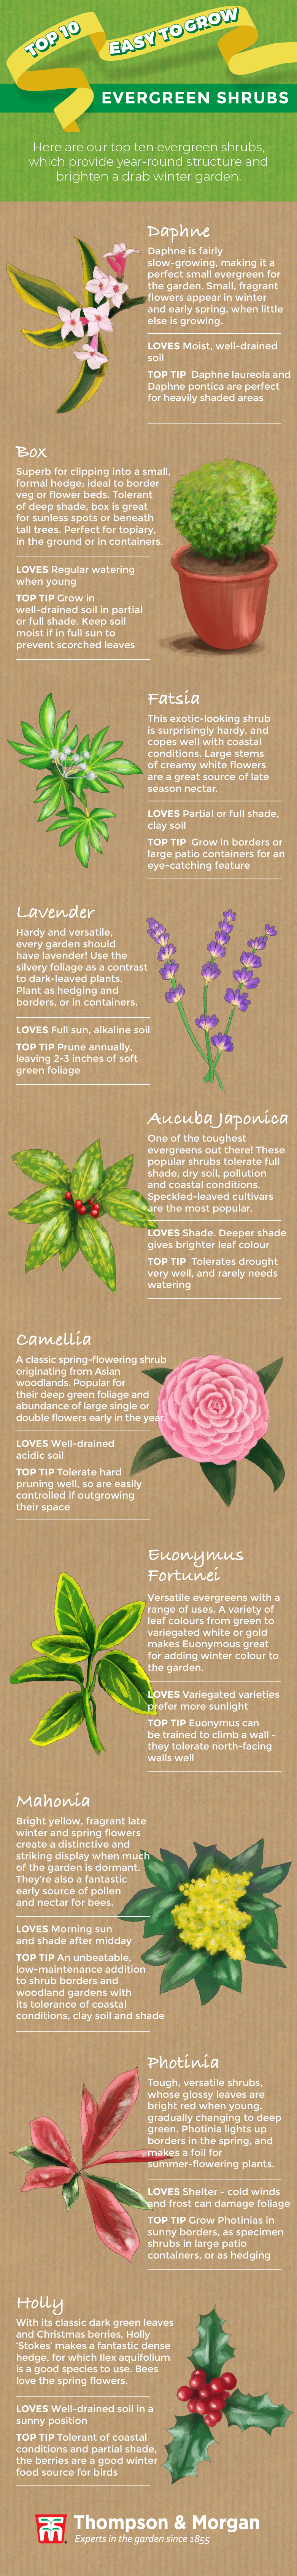 top ten evergreen shrubs infographic from thompson & morgan